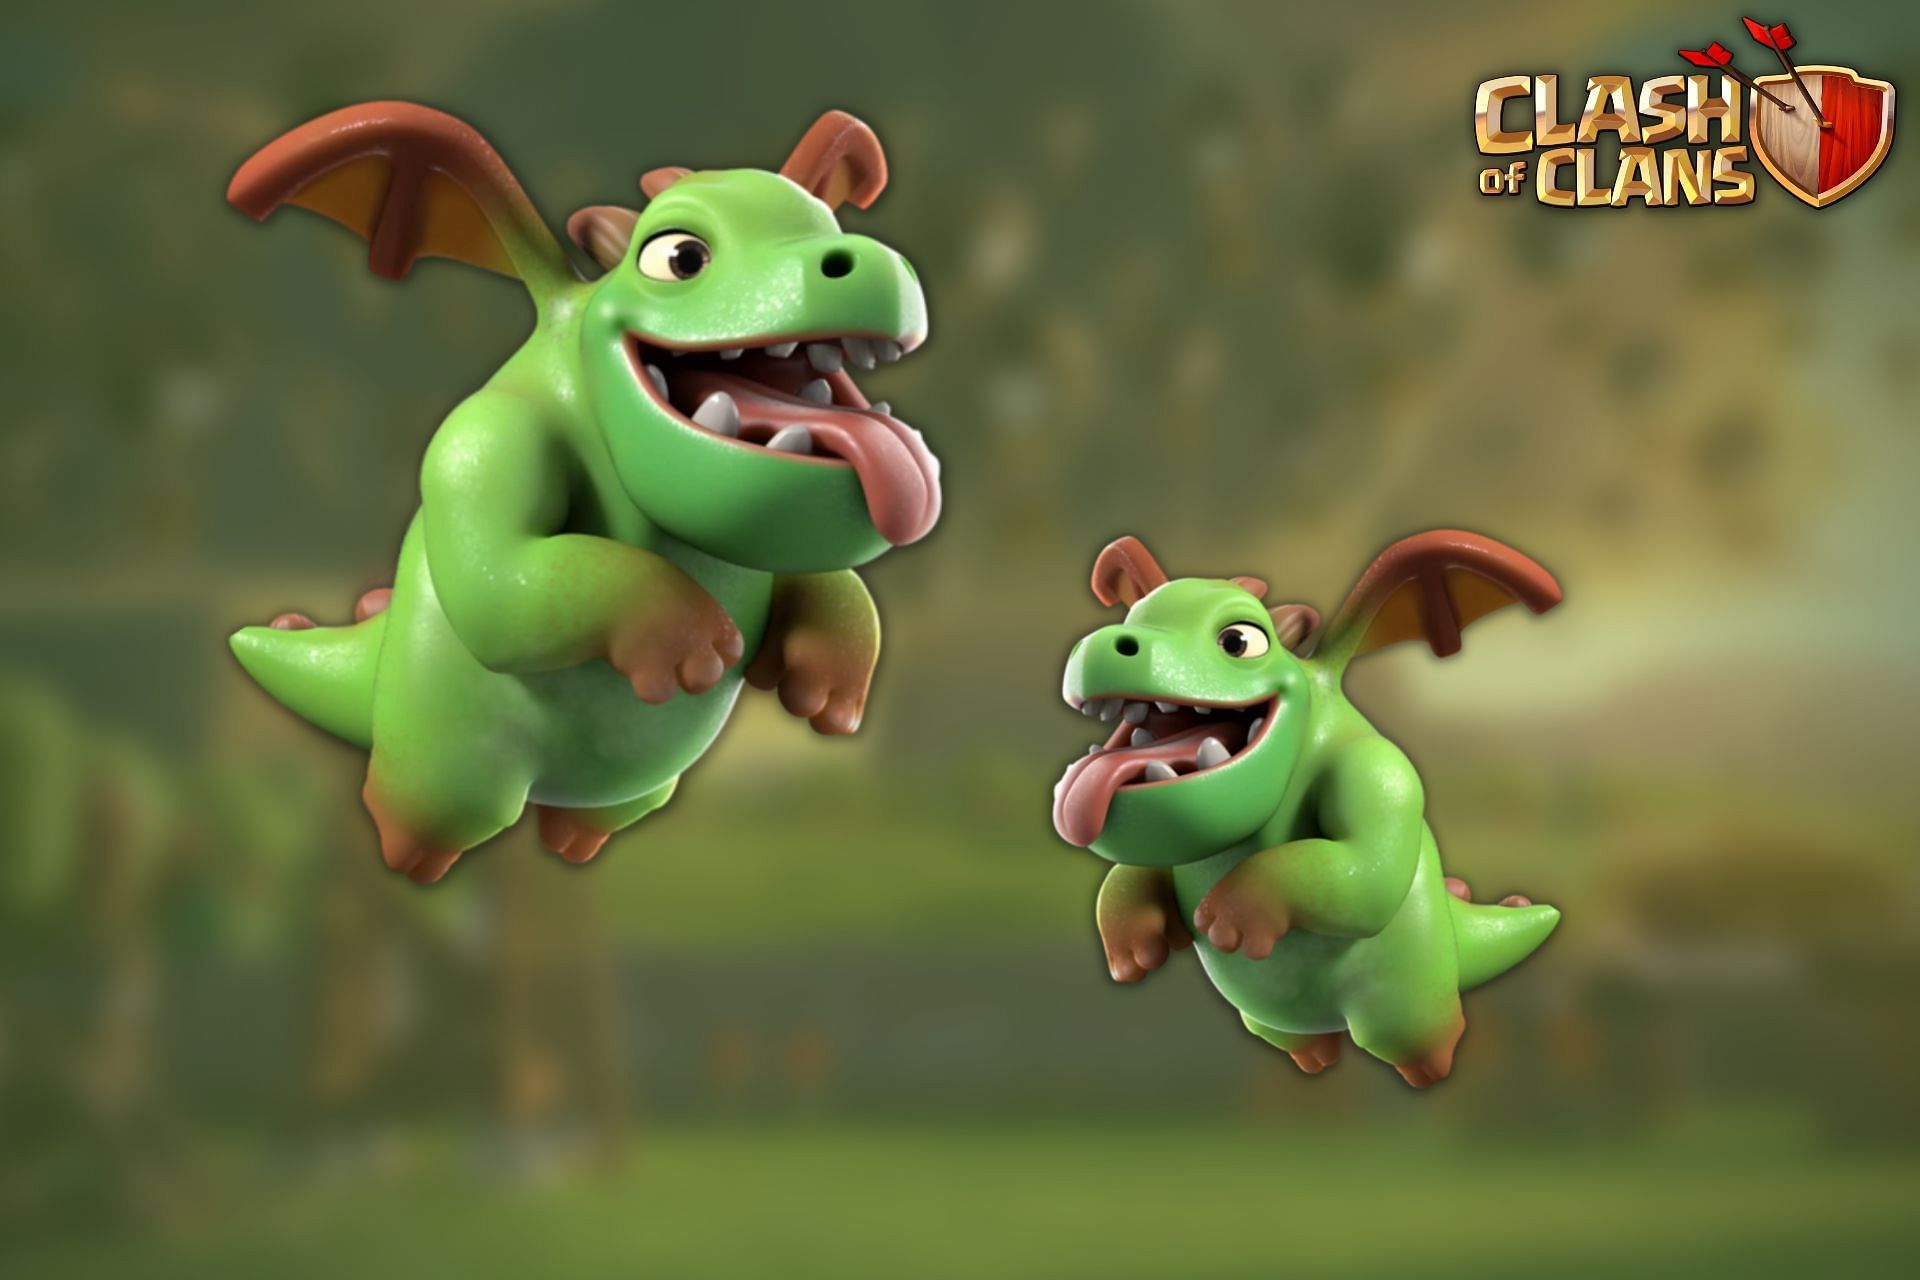 The Baby Dragons in Clash of Clans (Image via Sportskeeda)